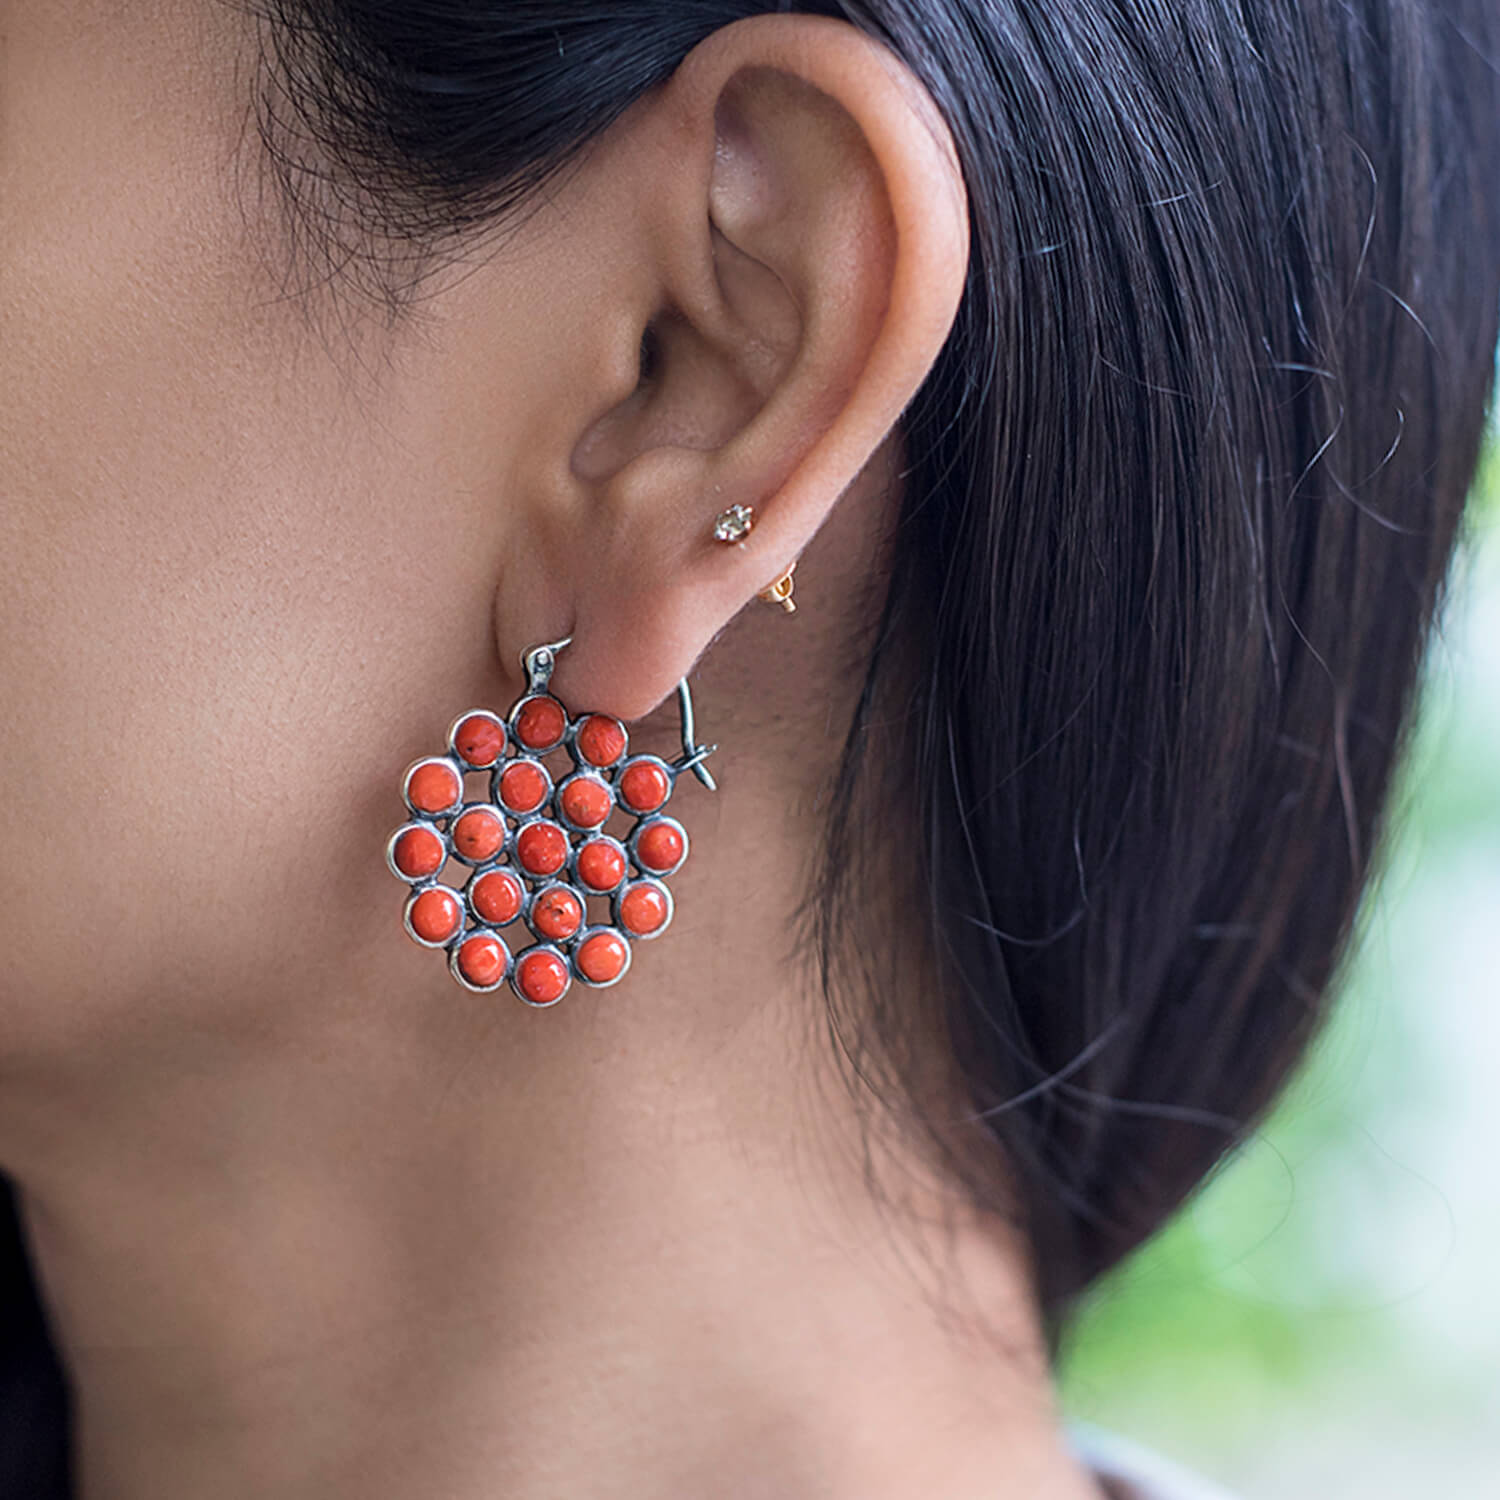  beads earrings